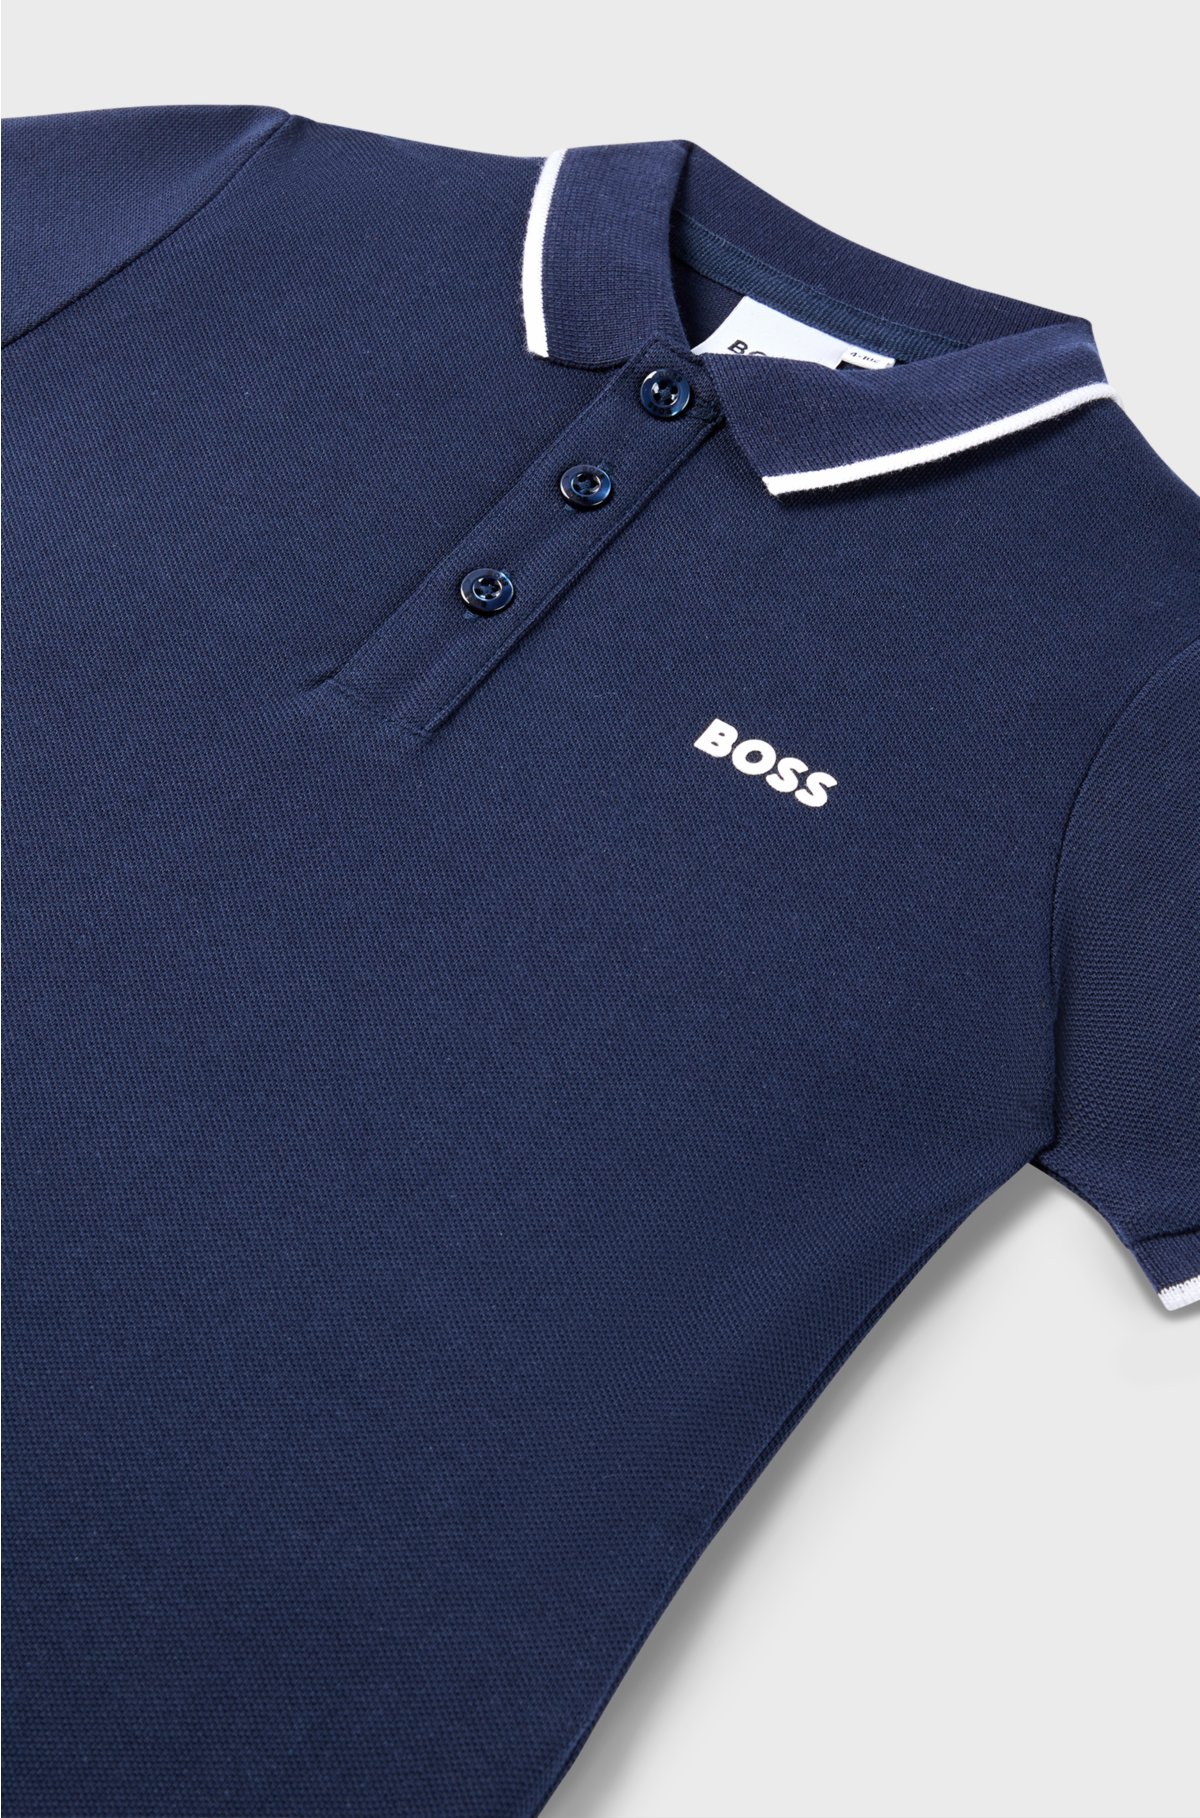 Kids' polo shirt in cotton piqué with printed logo, Dark Blue